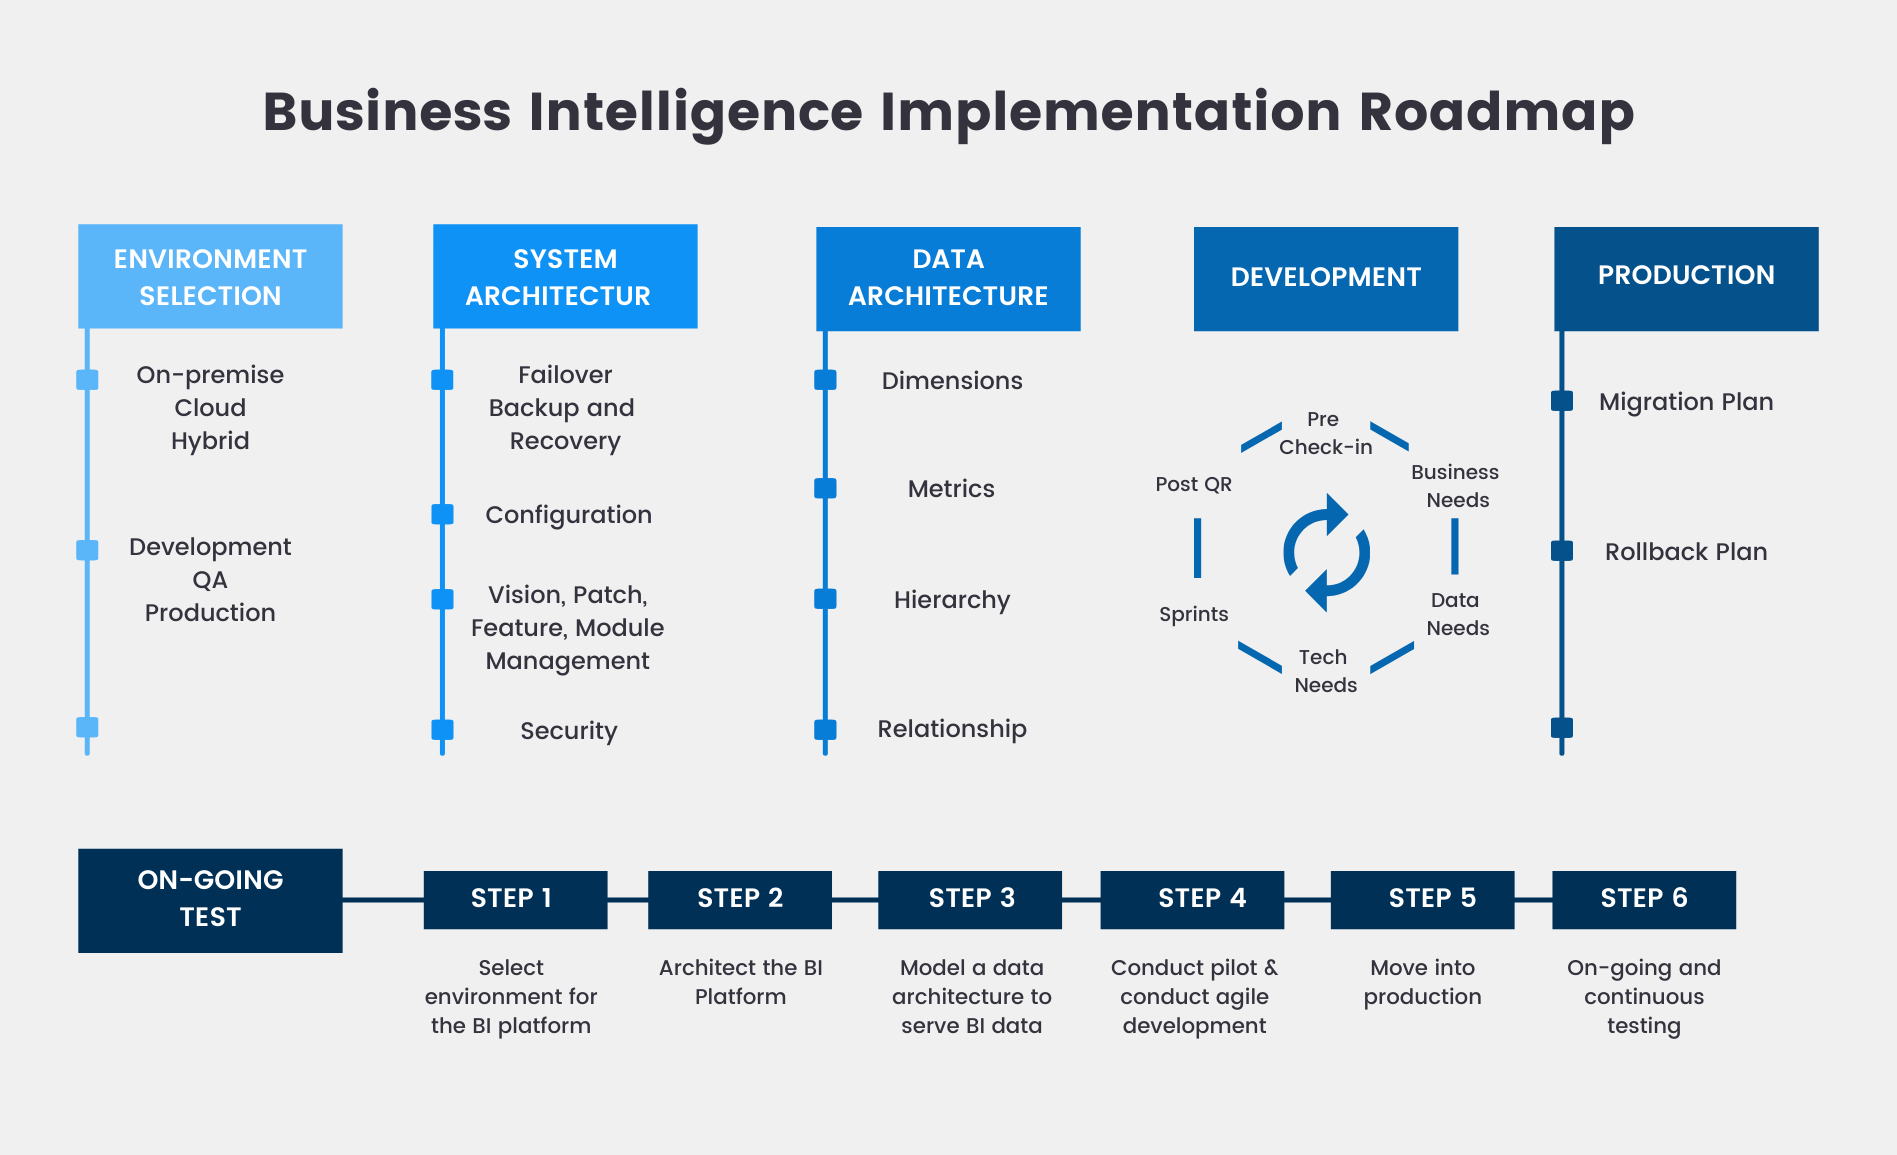 Business Intelligence Implementation Roadmap (1) ?width=1897&name=Business Intelligence Implementation Roadmap (1) 